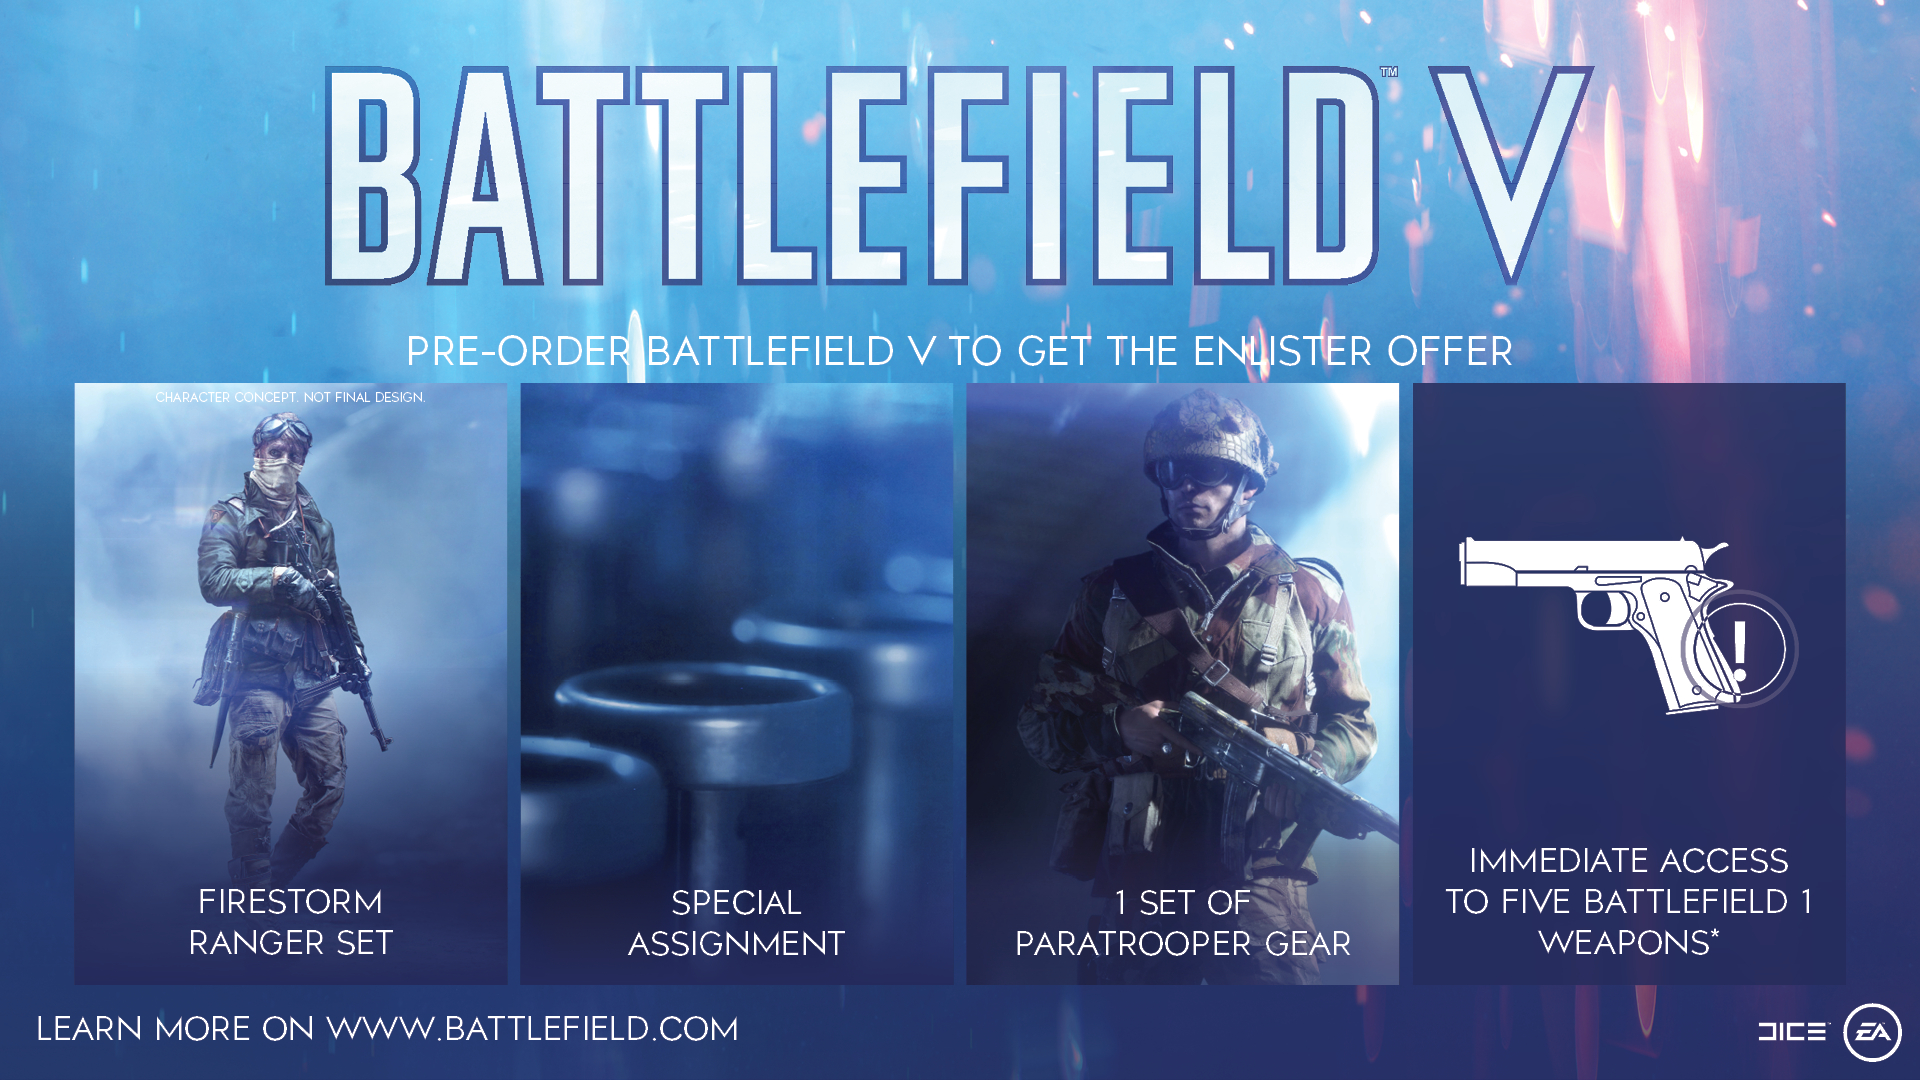 battlefield 5 pre order sales down